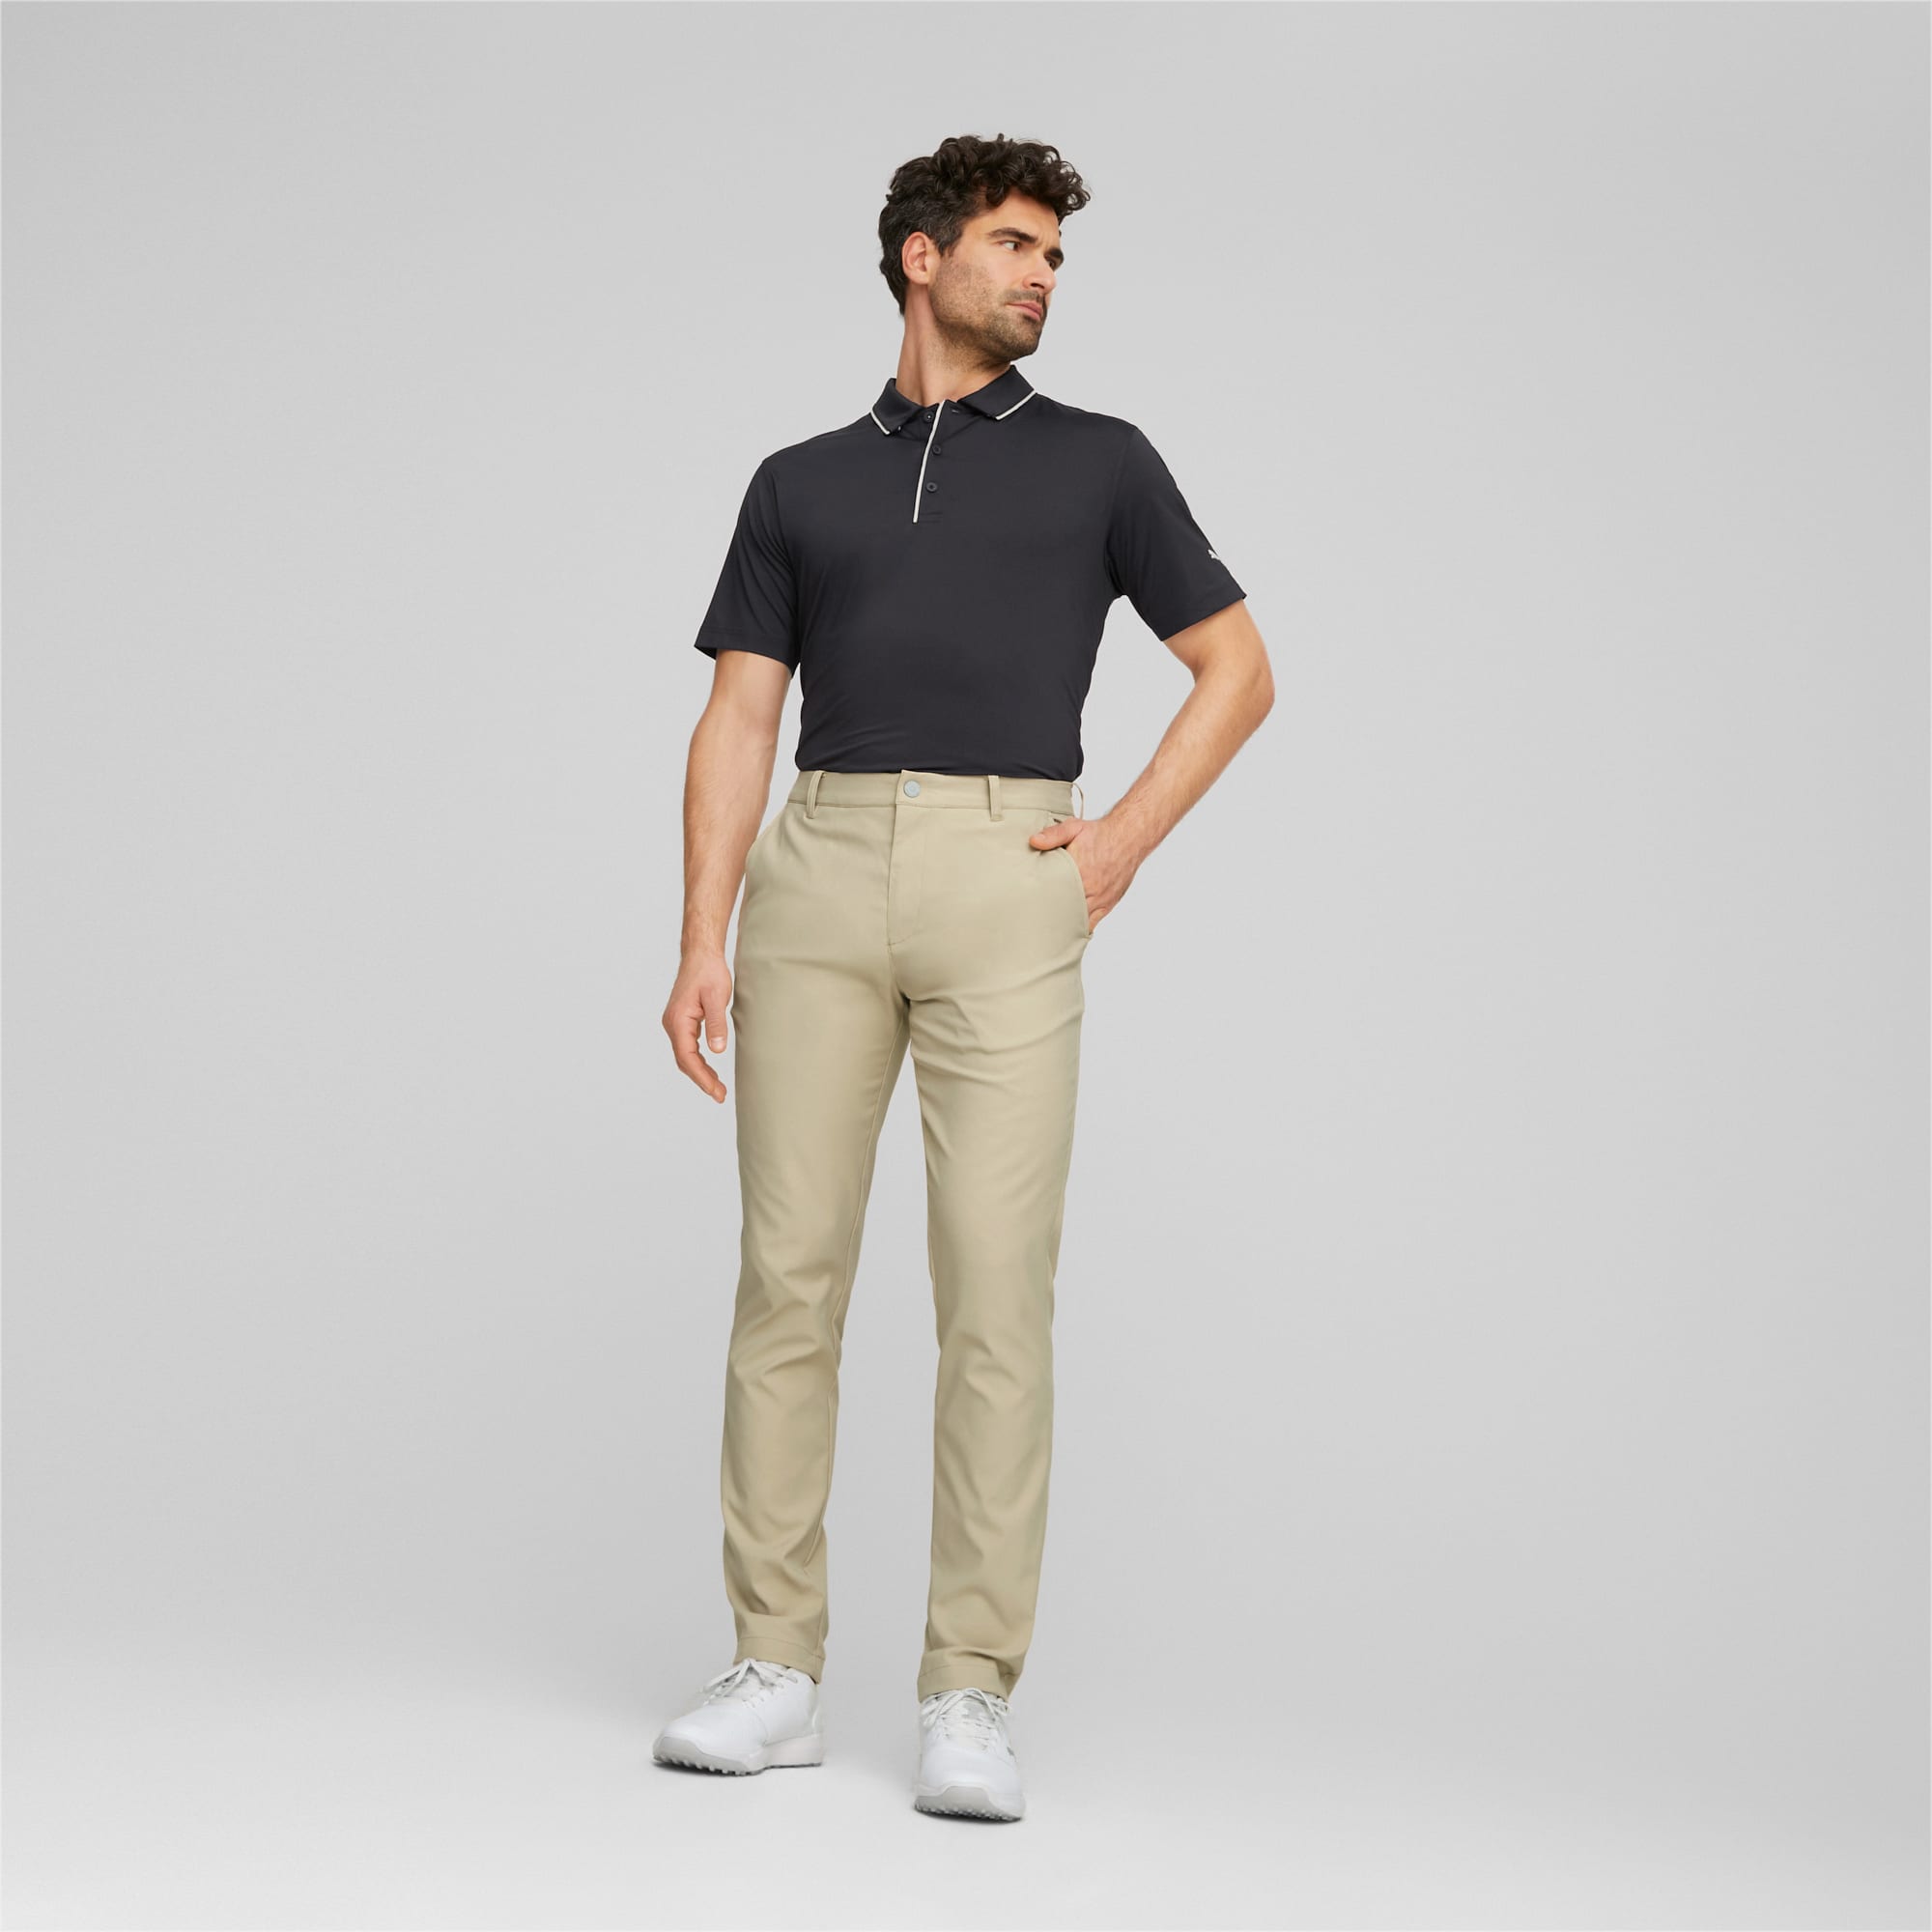 PUMA Dealer Tailored Golf Pants Men, Alabaster, Size 33/30, Clothing